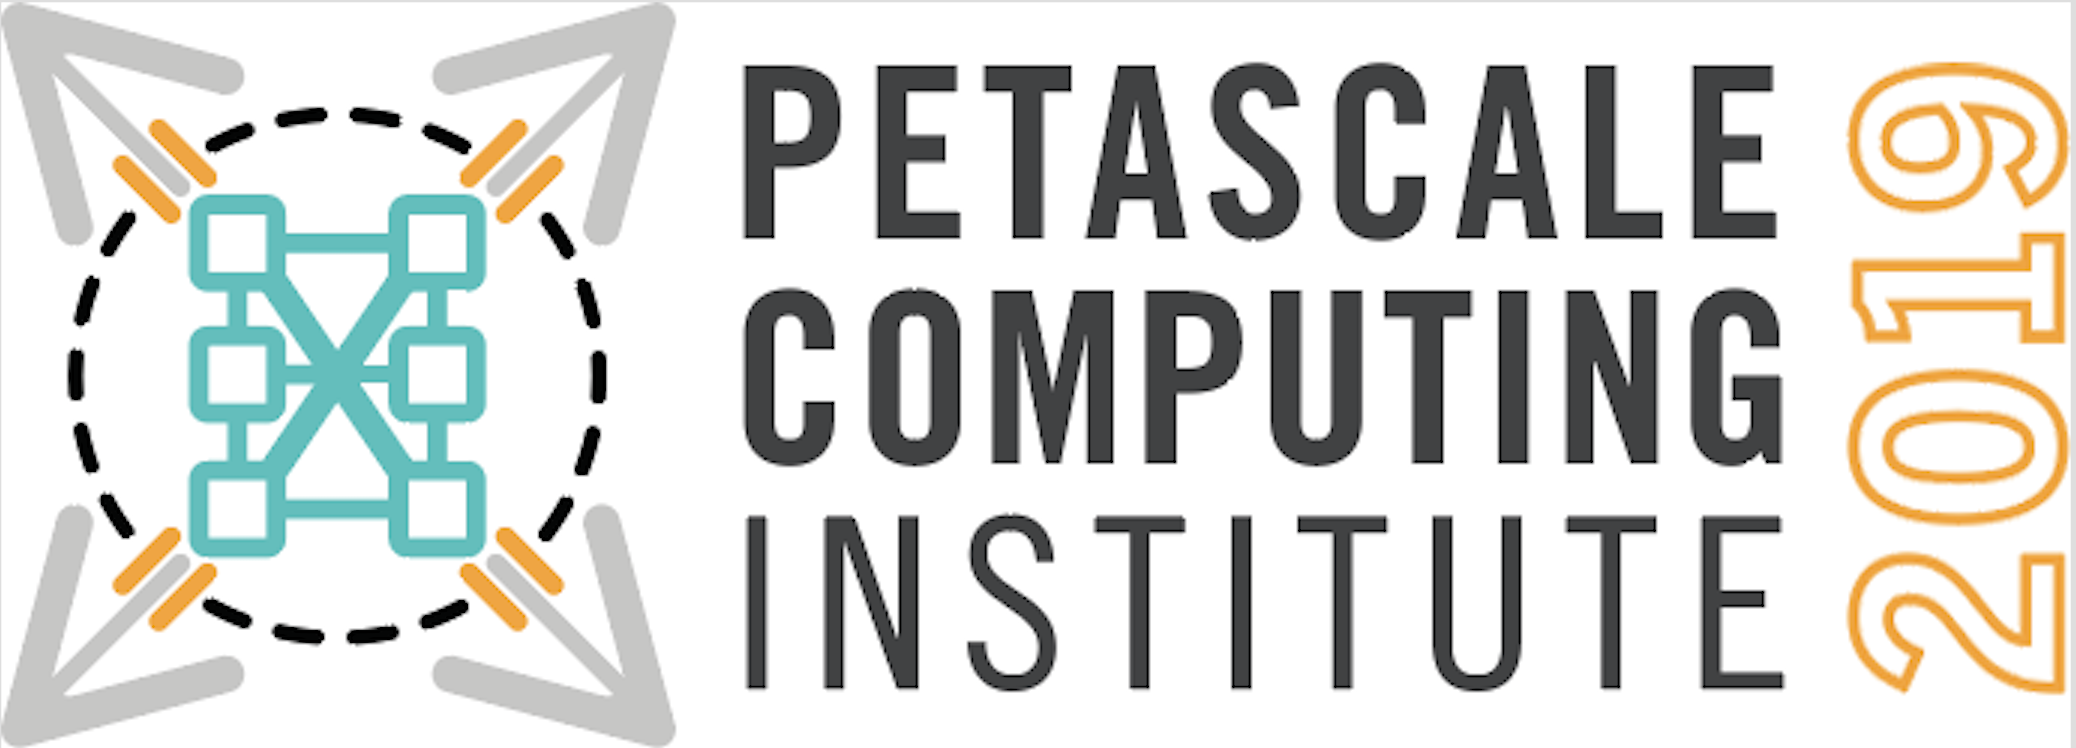 petascale_computing_institute_logo.png (522 KB)